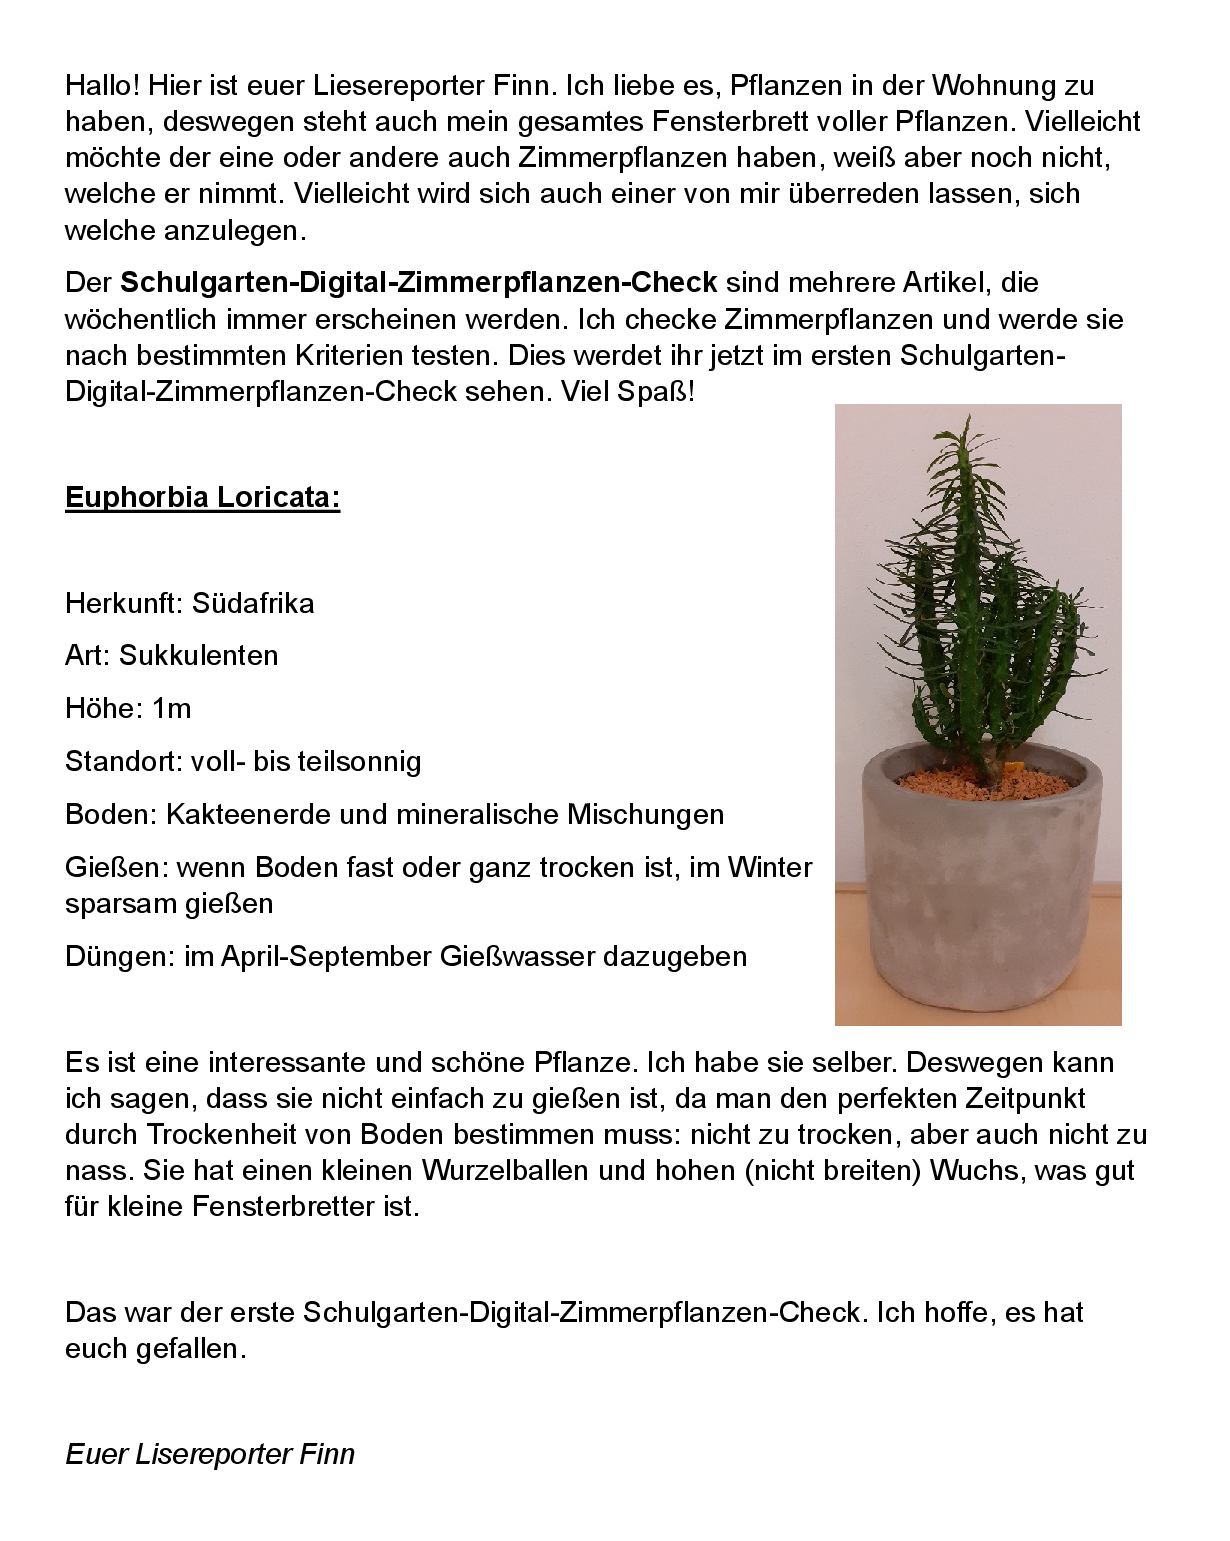 Schulgarten_Digital_Zimmerpflanzen_Check_Folge_1.png